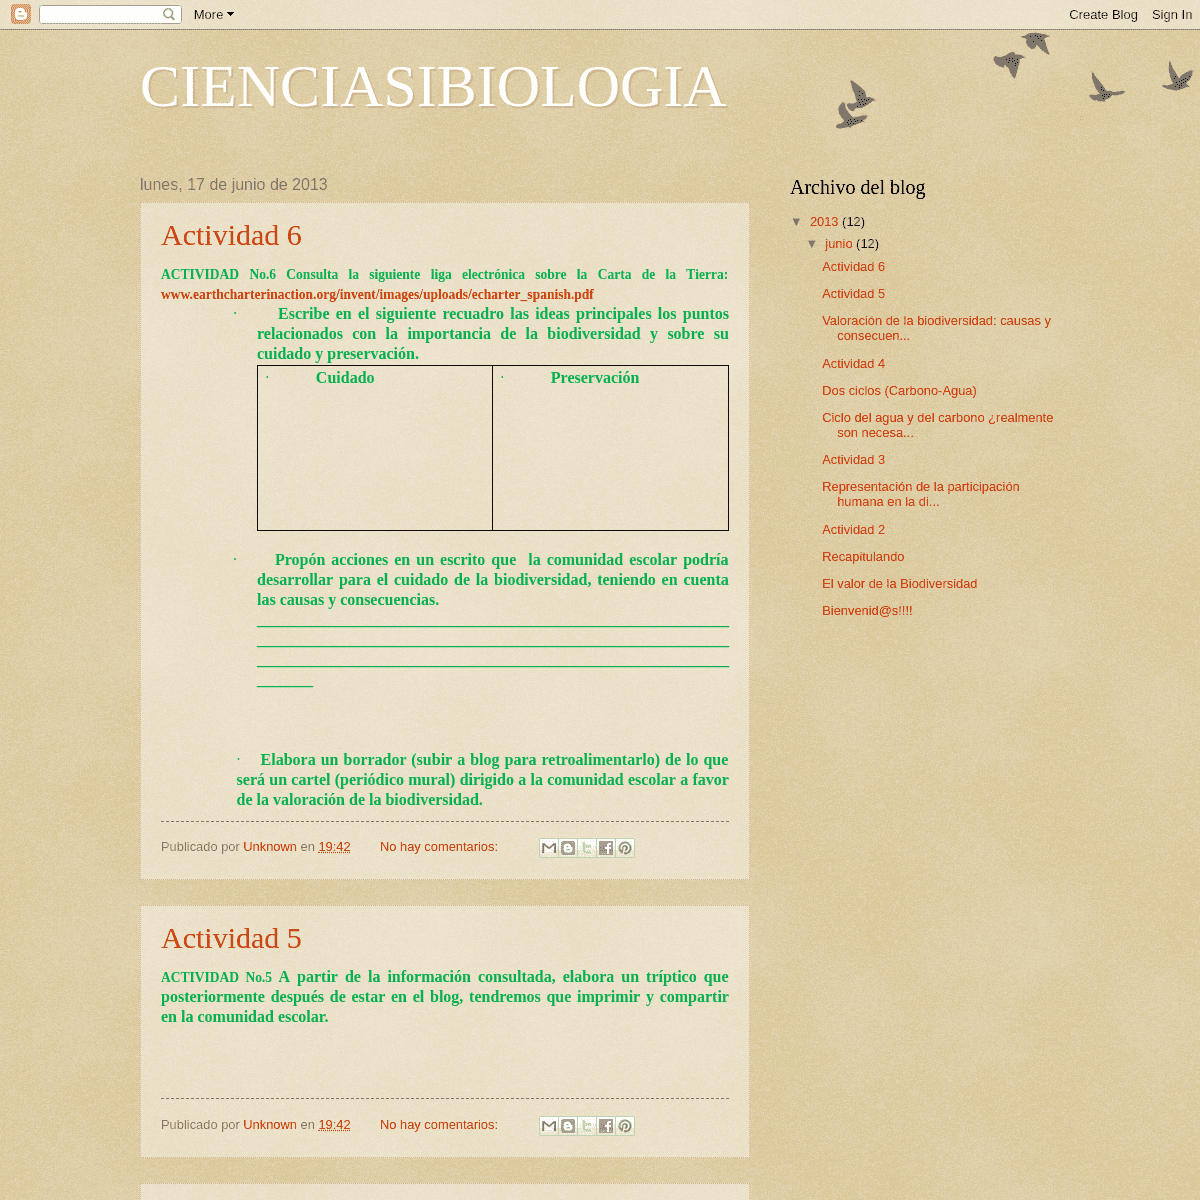 A complete backup of cienciasybiologiamixta17.blogspot.com